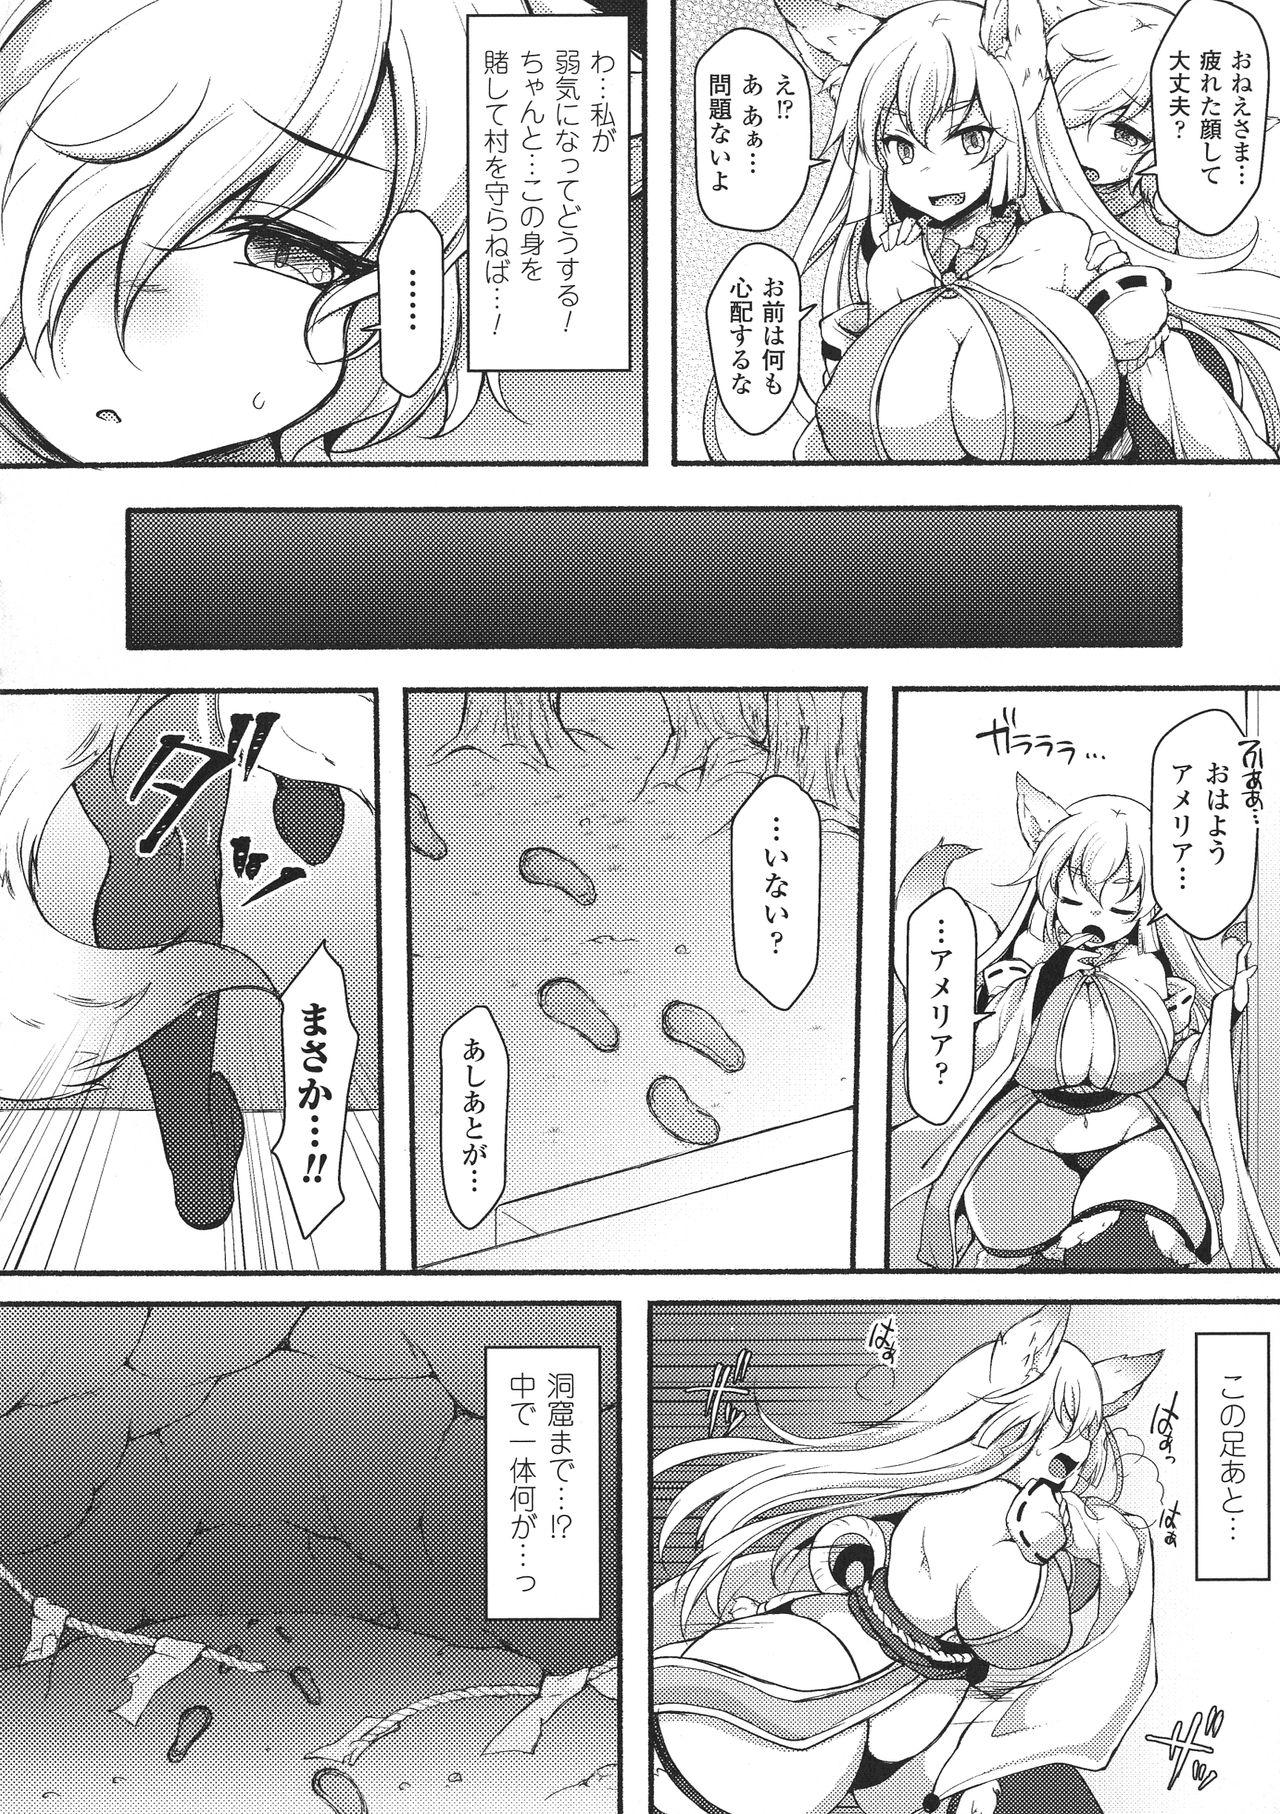 Seigi no Heroine Kangoku File DX Vol. 8 133